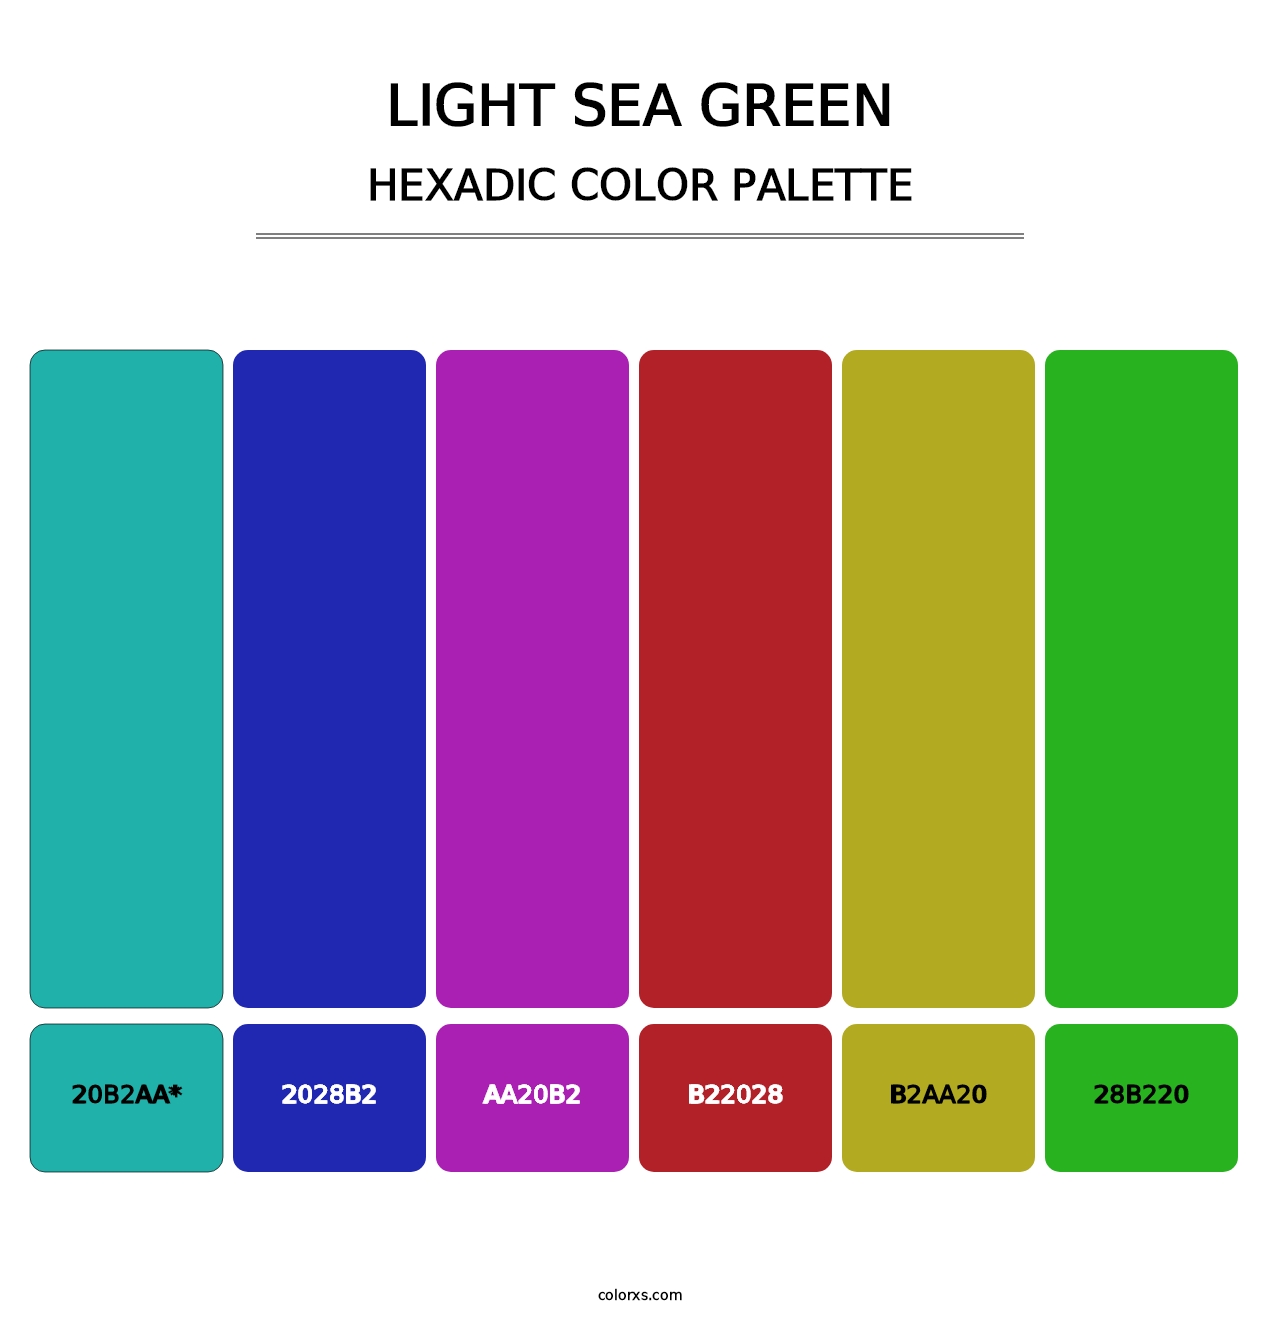 Light Sea Green - Hexadic Color Palette